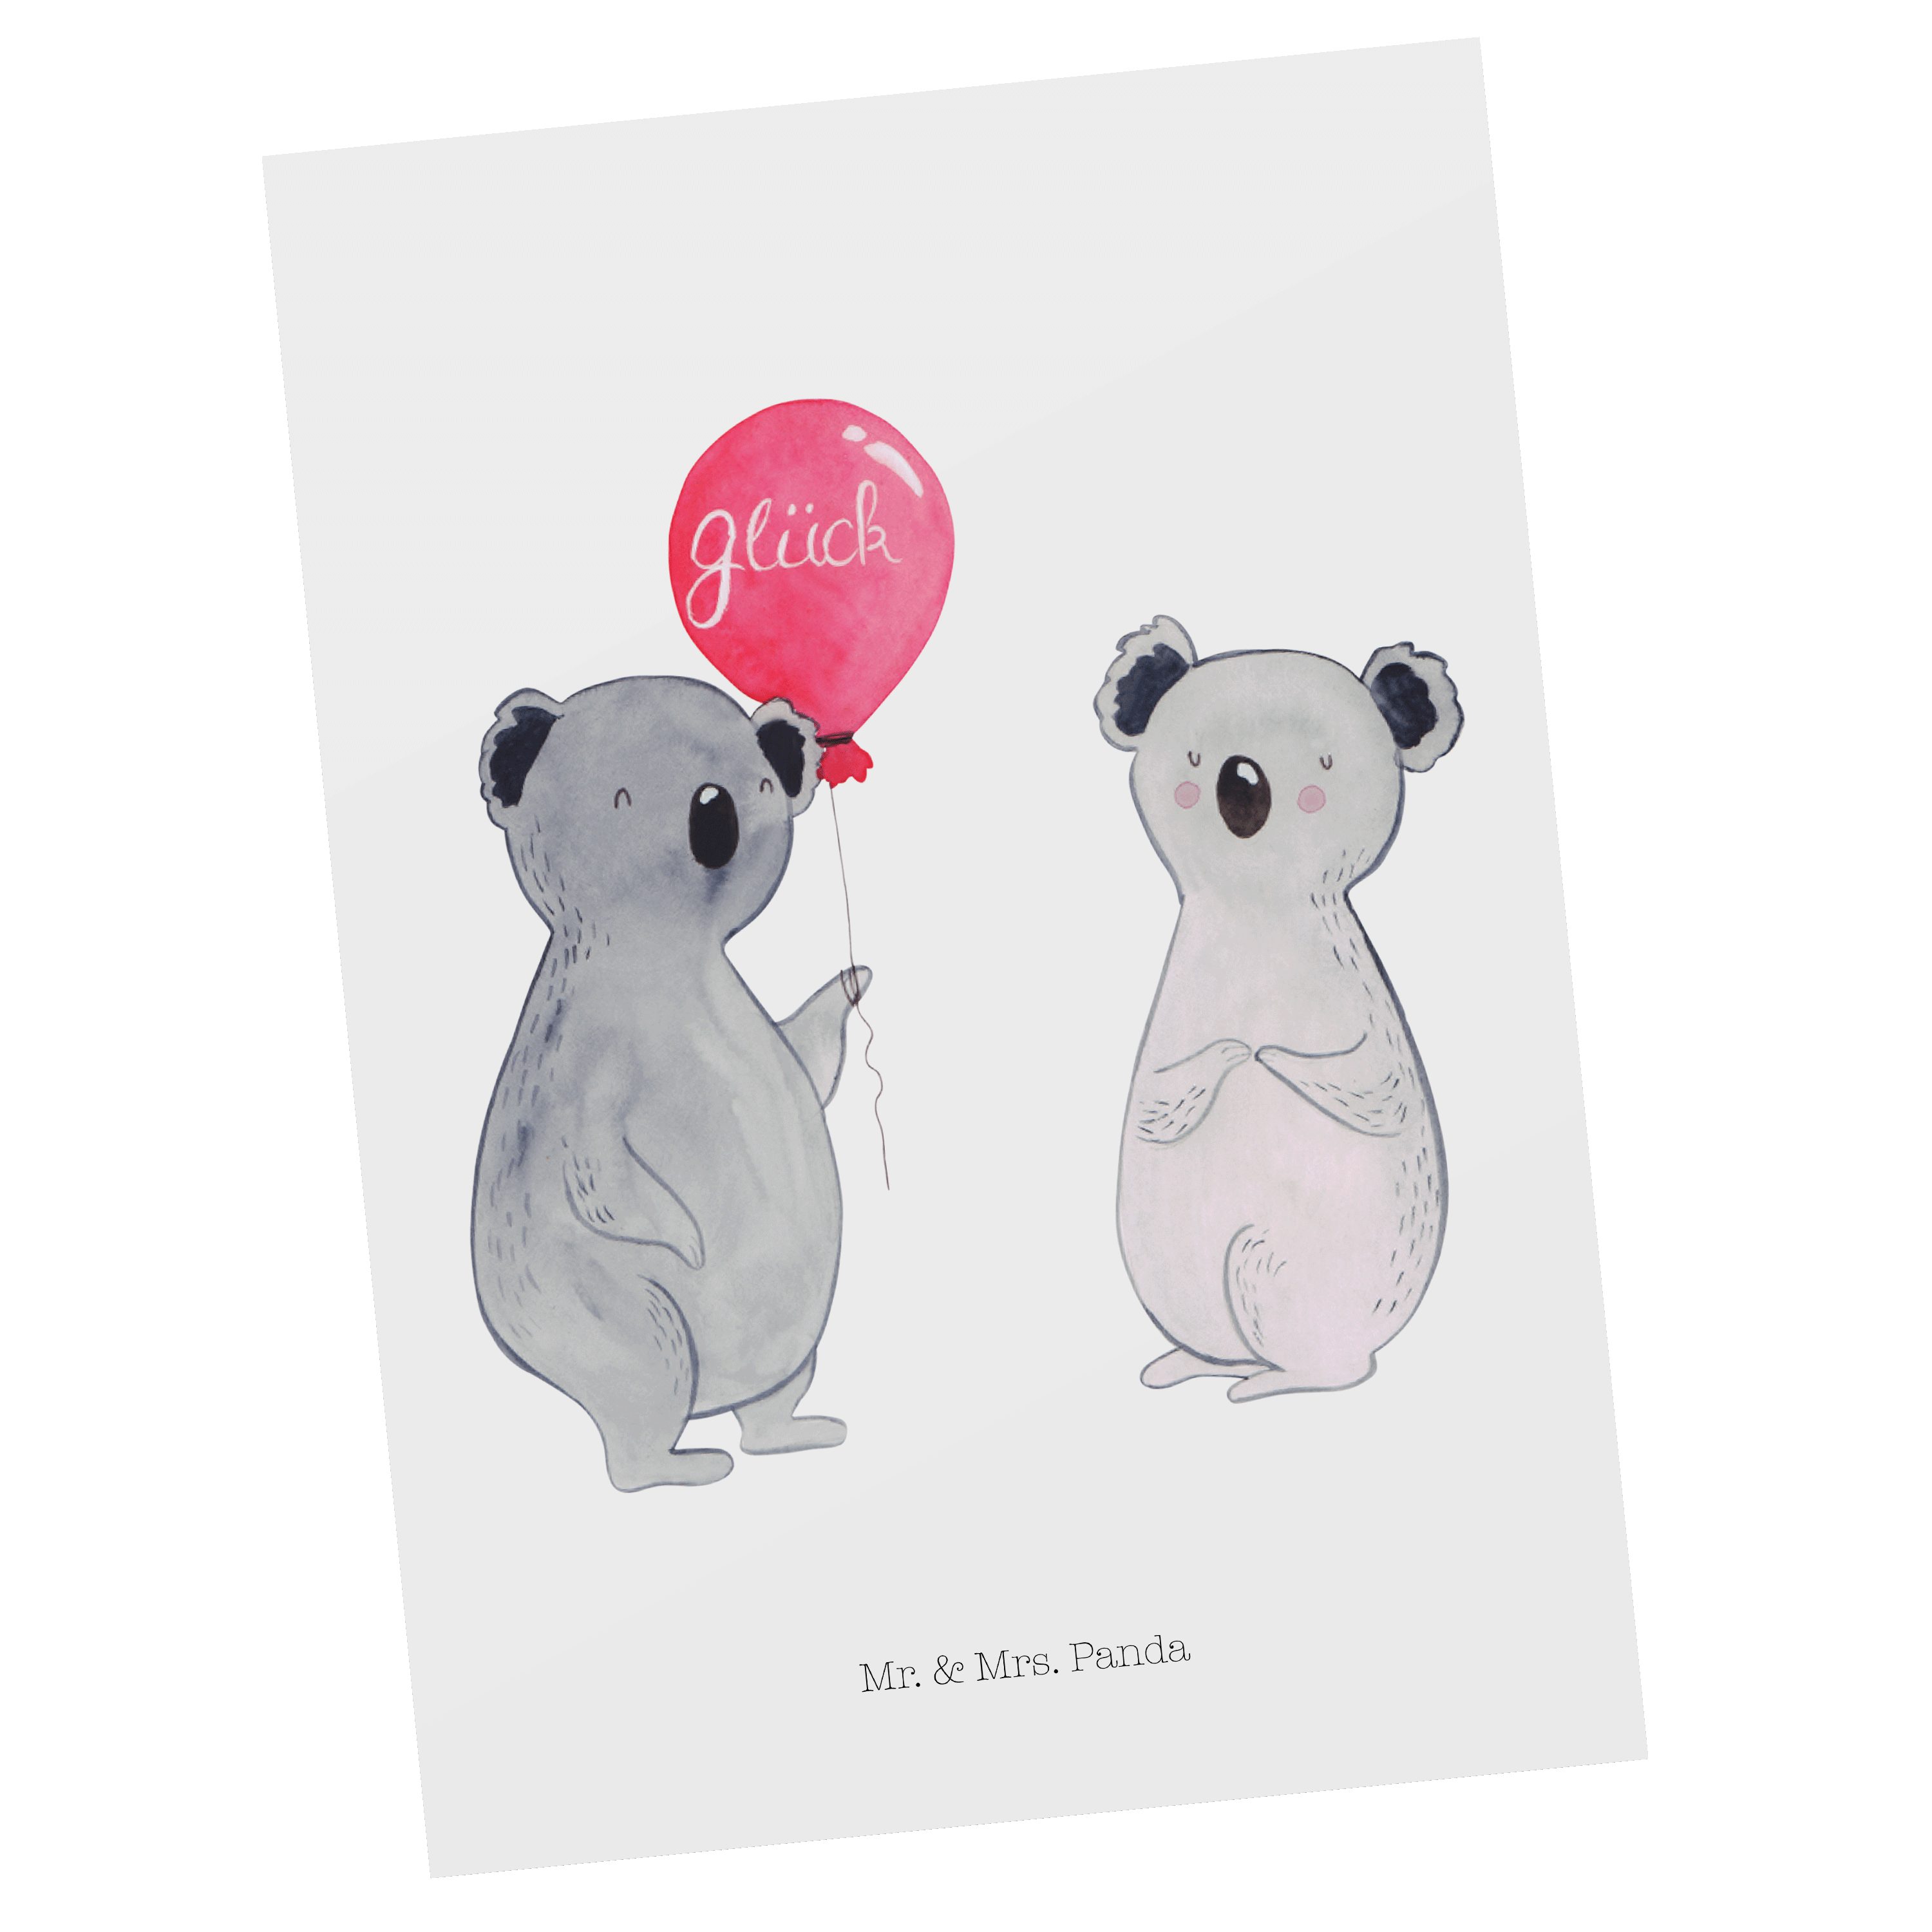 Mr. & Mrs. Panda Postkarte Koala Luftballon - Weiß - Geschenk, Einladungskarte, Grußkarte, Party | Grußkarten